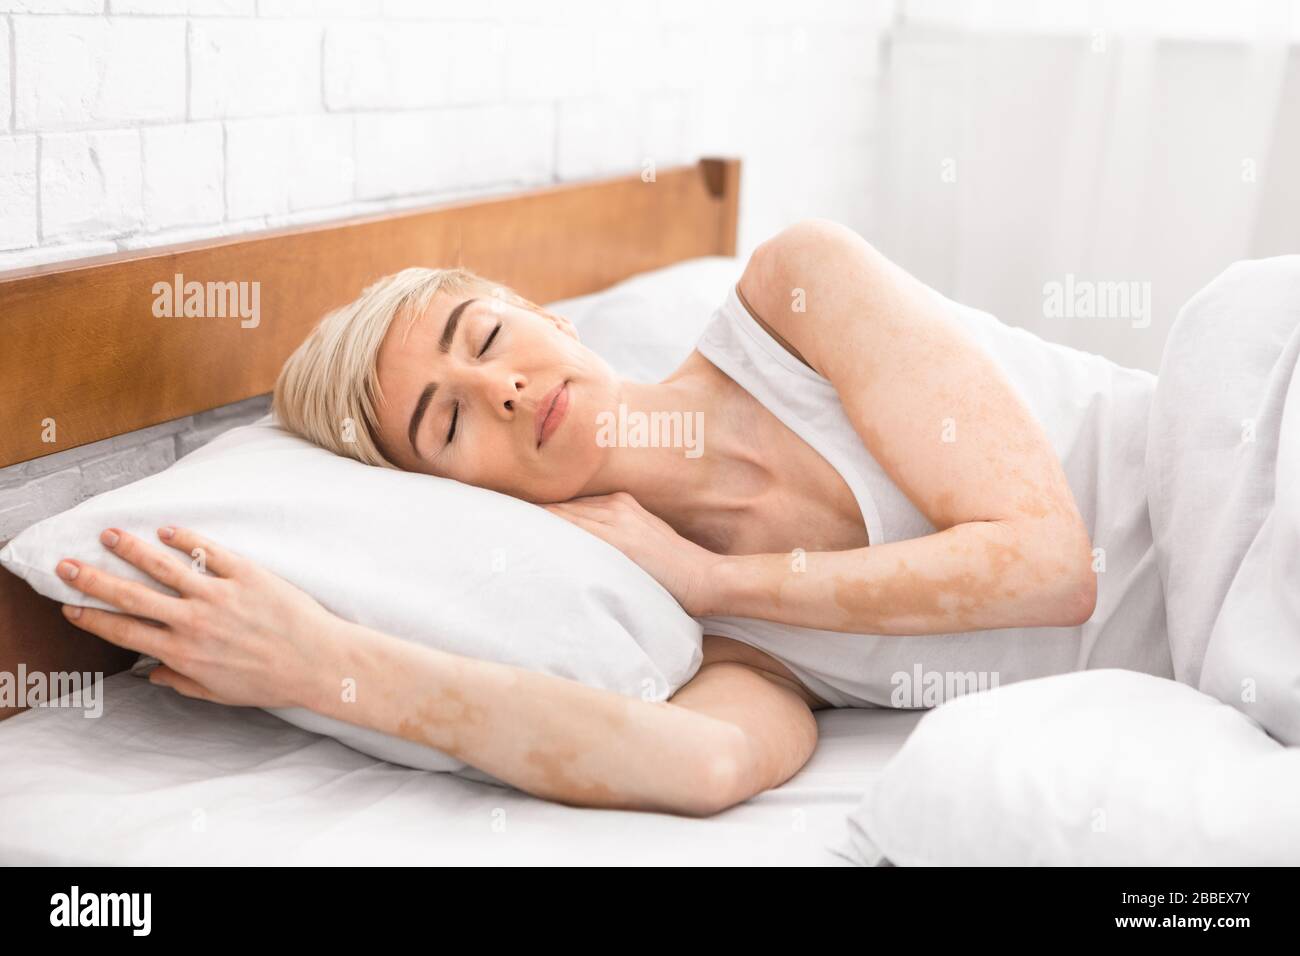 Portrait of mature sleeping lady with vitiligo disease Stock Photo